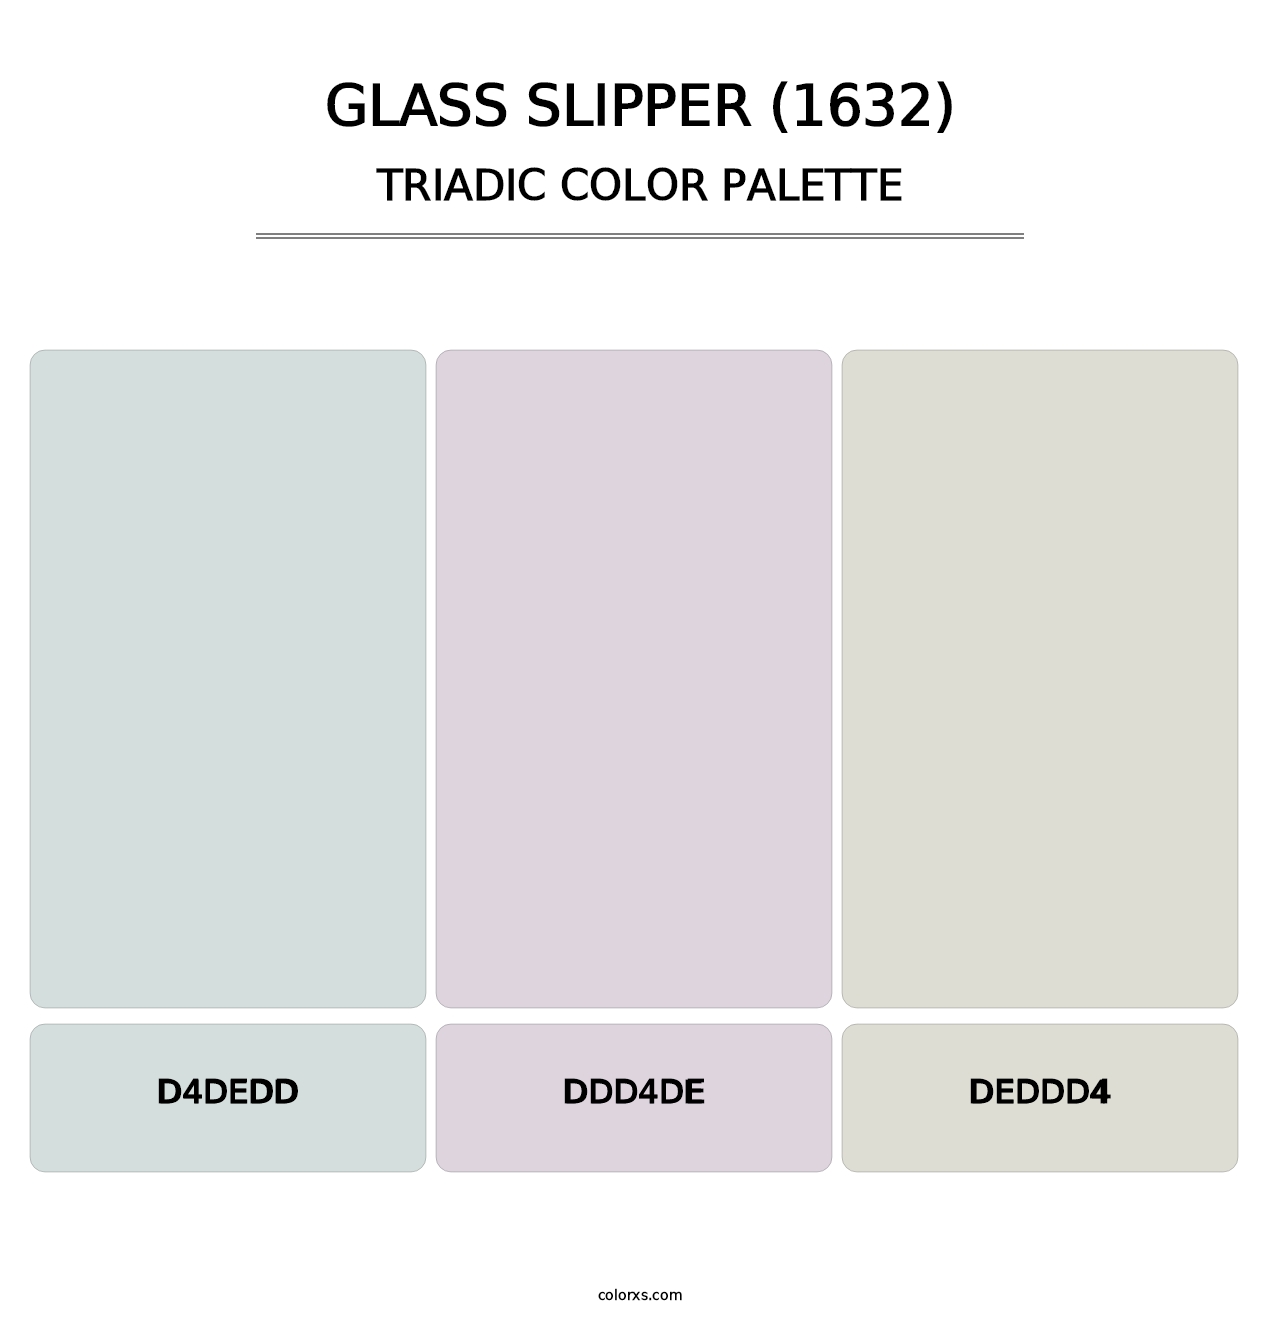 Glass Slipper (1632) - Triadic Color Palette